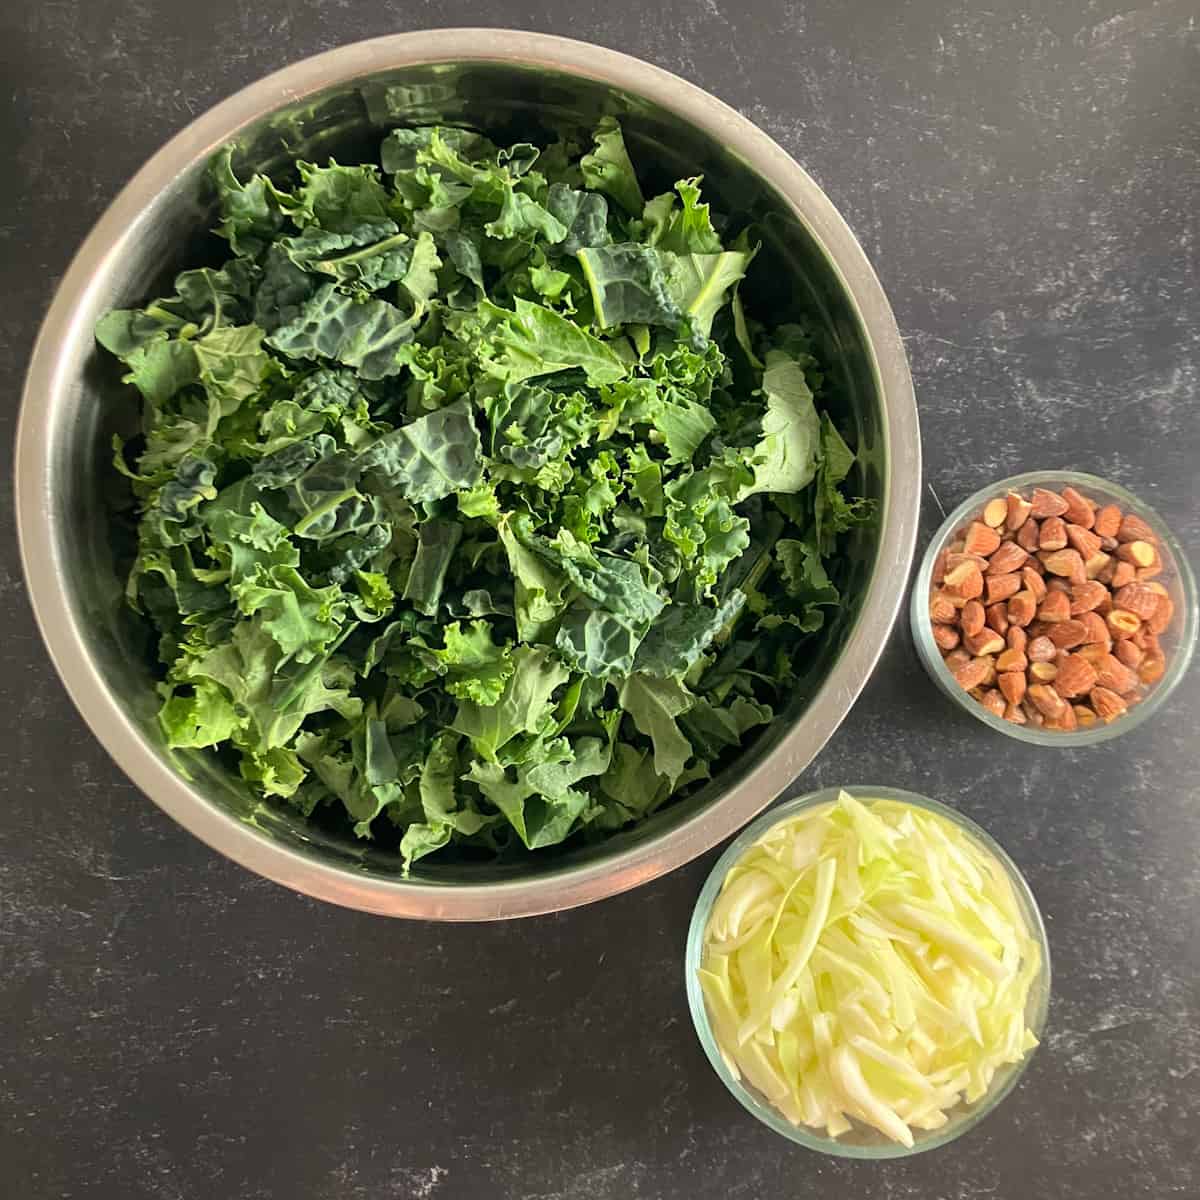 chick fil a kale salad ingredients